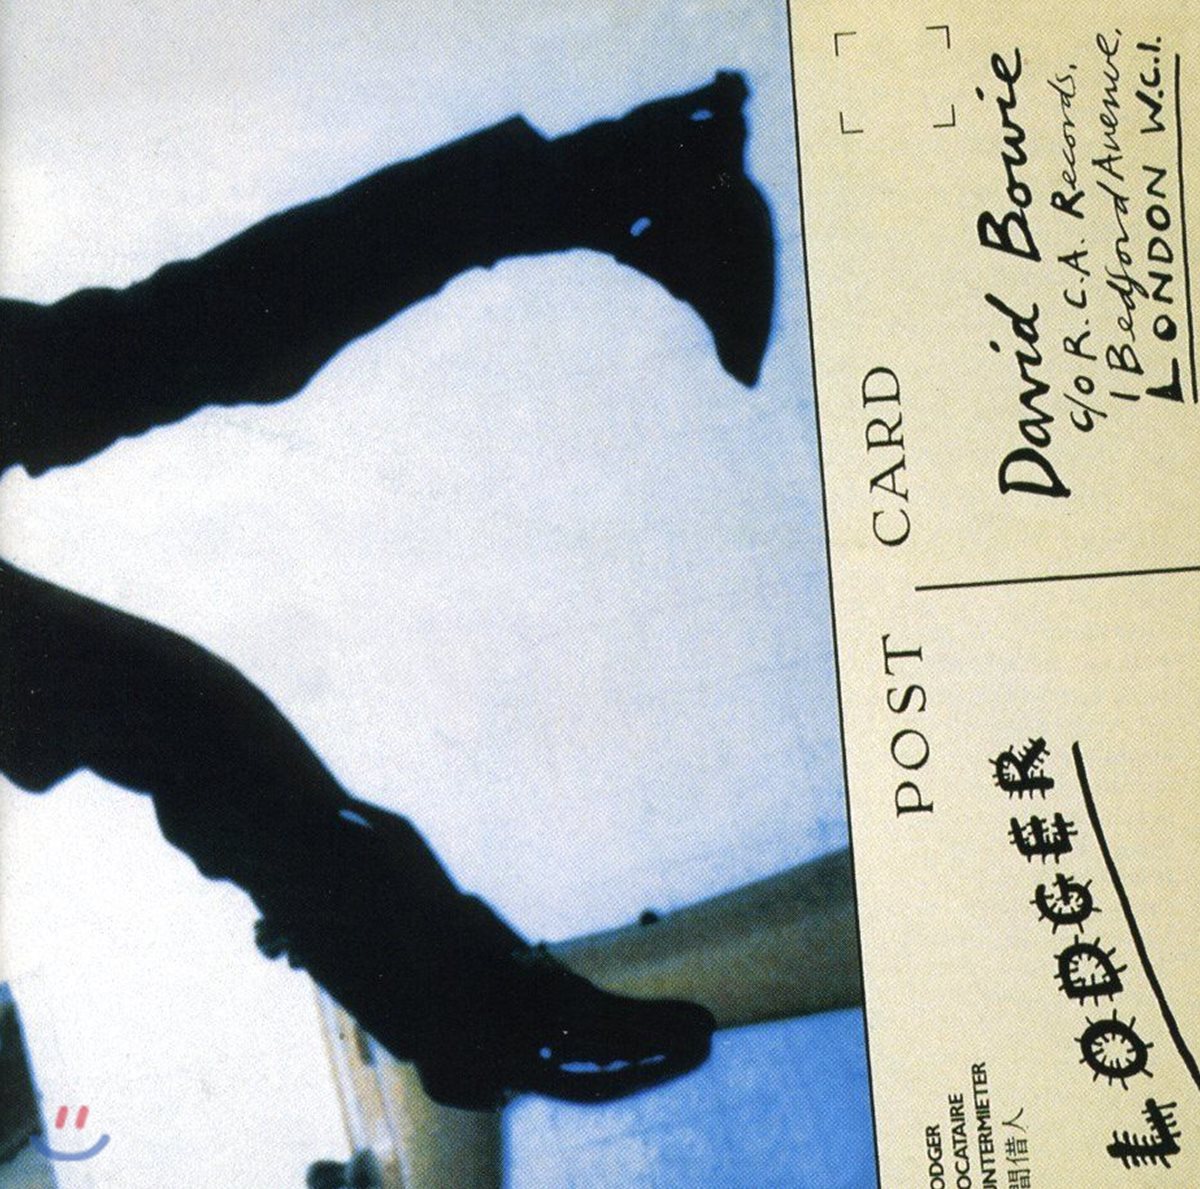 David Bowie (데이빗 보위) - Lodger [LP]